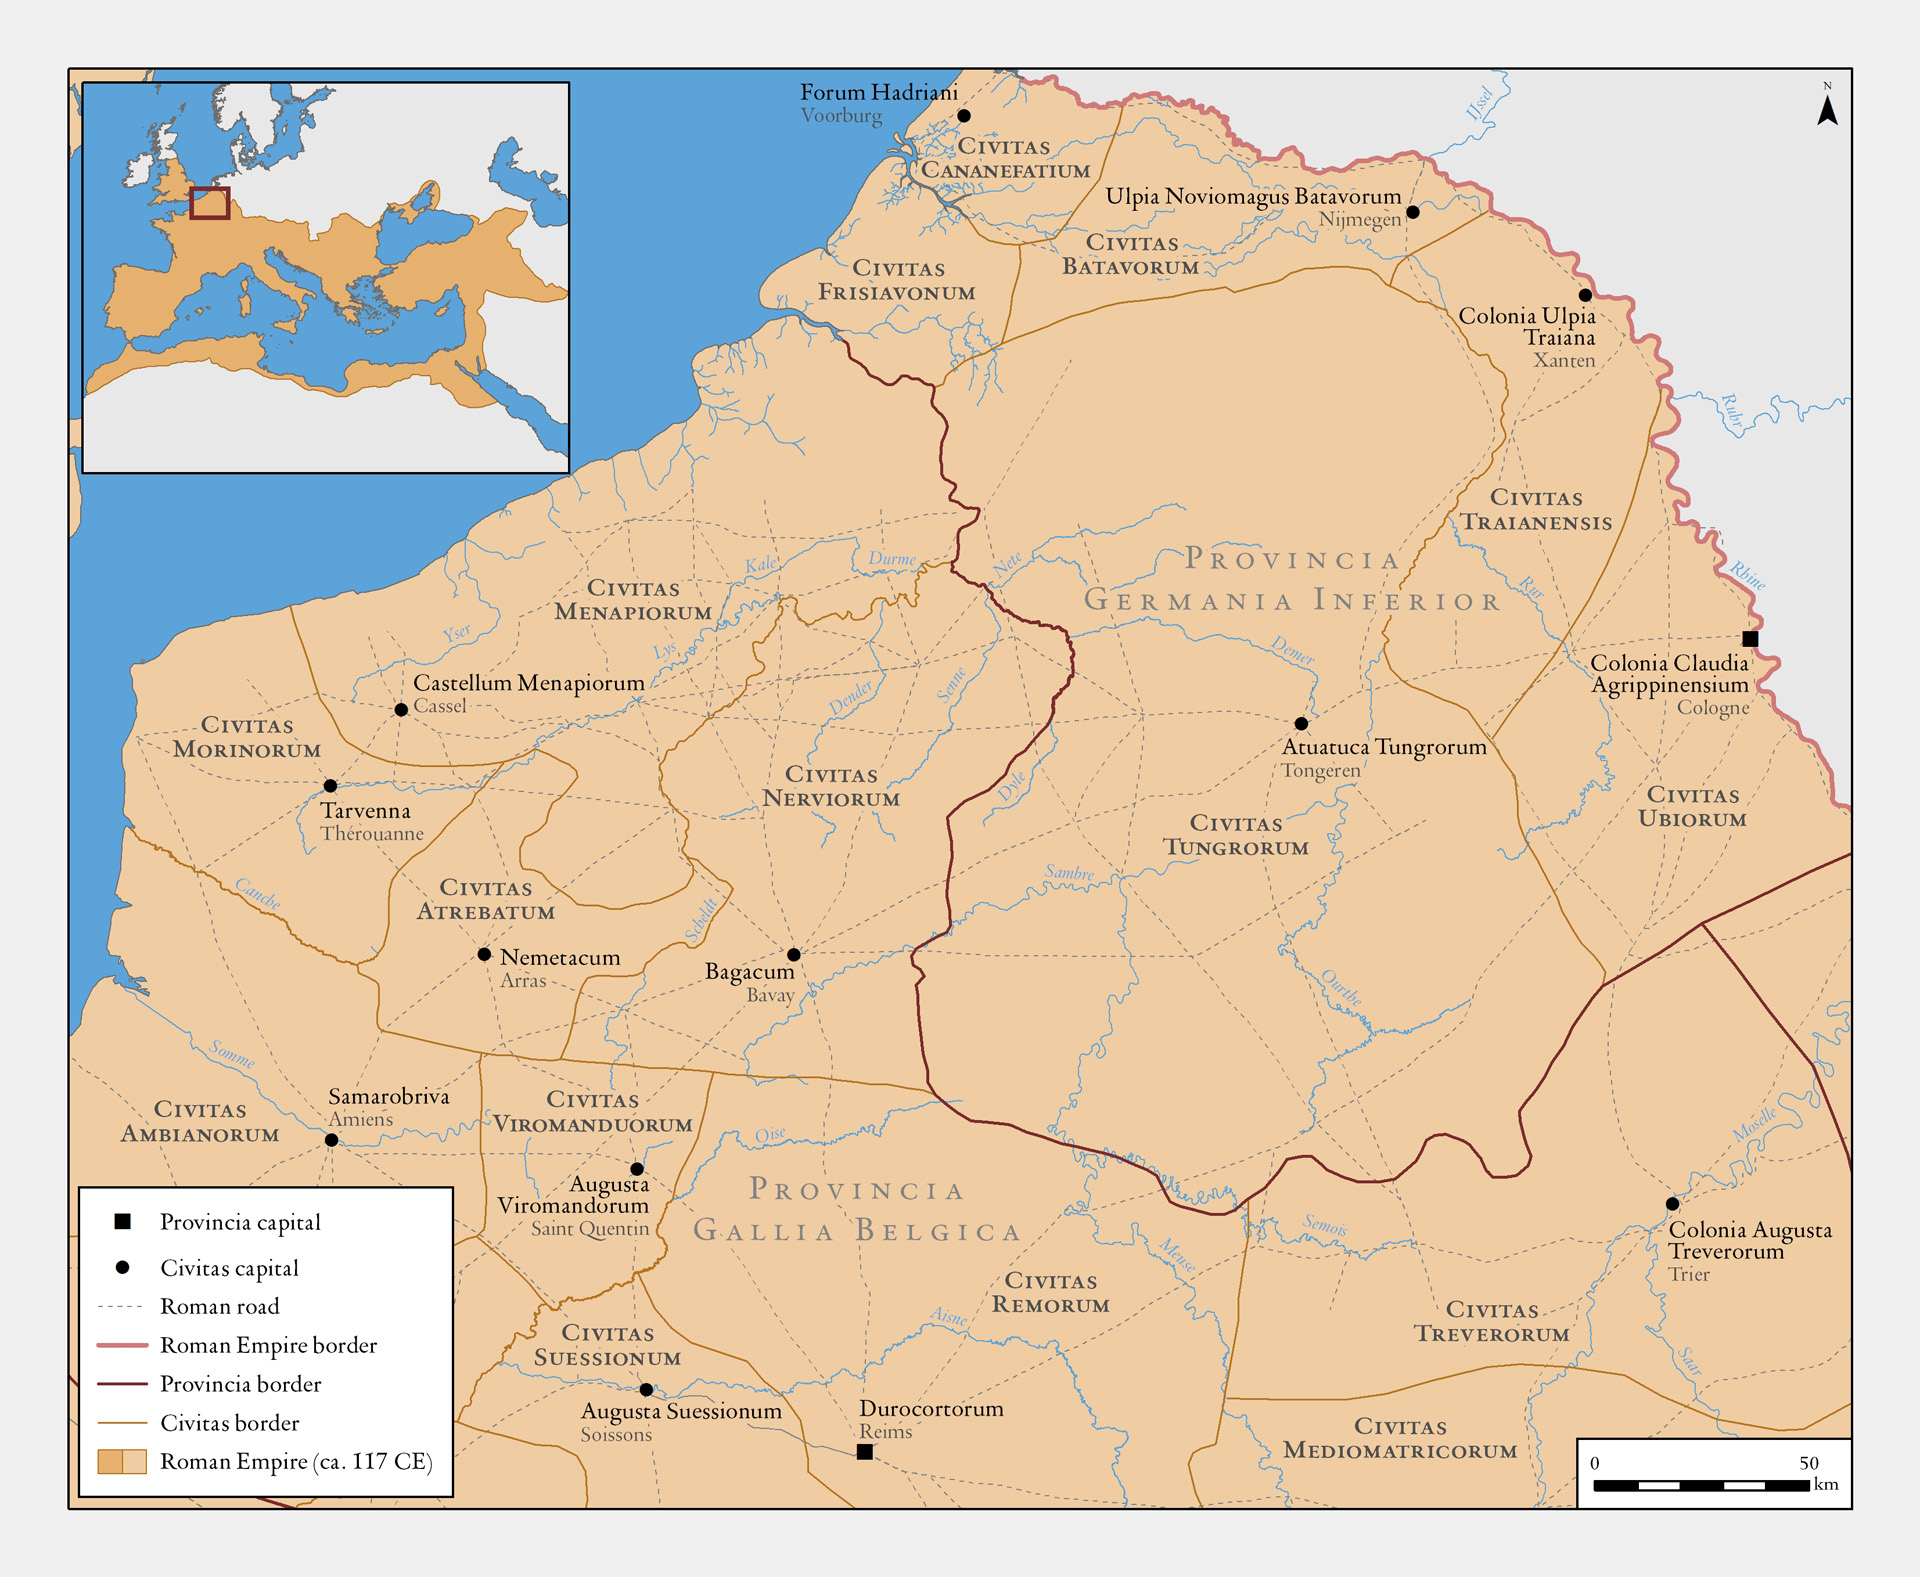 North-West Europe under the Romans, c. 117